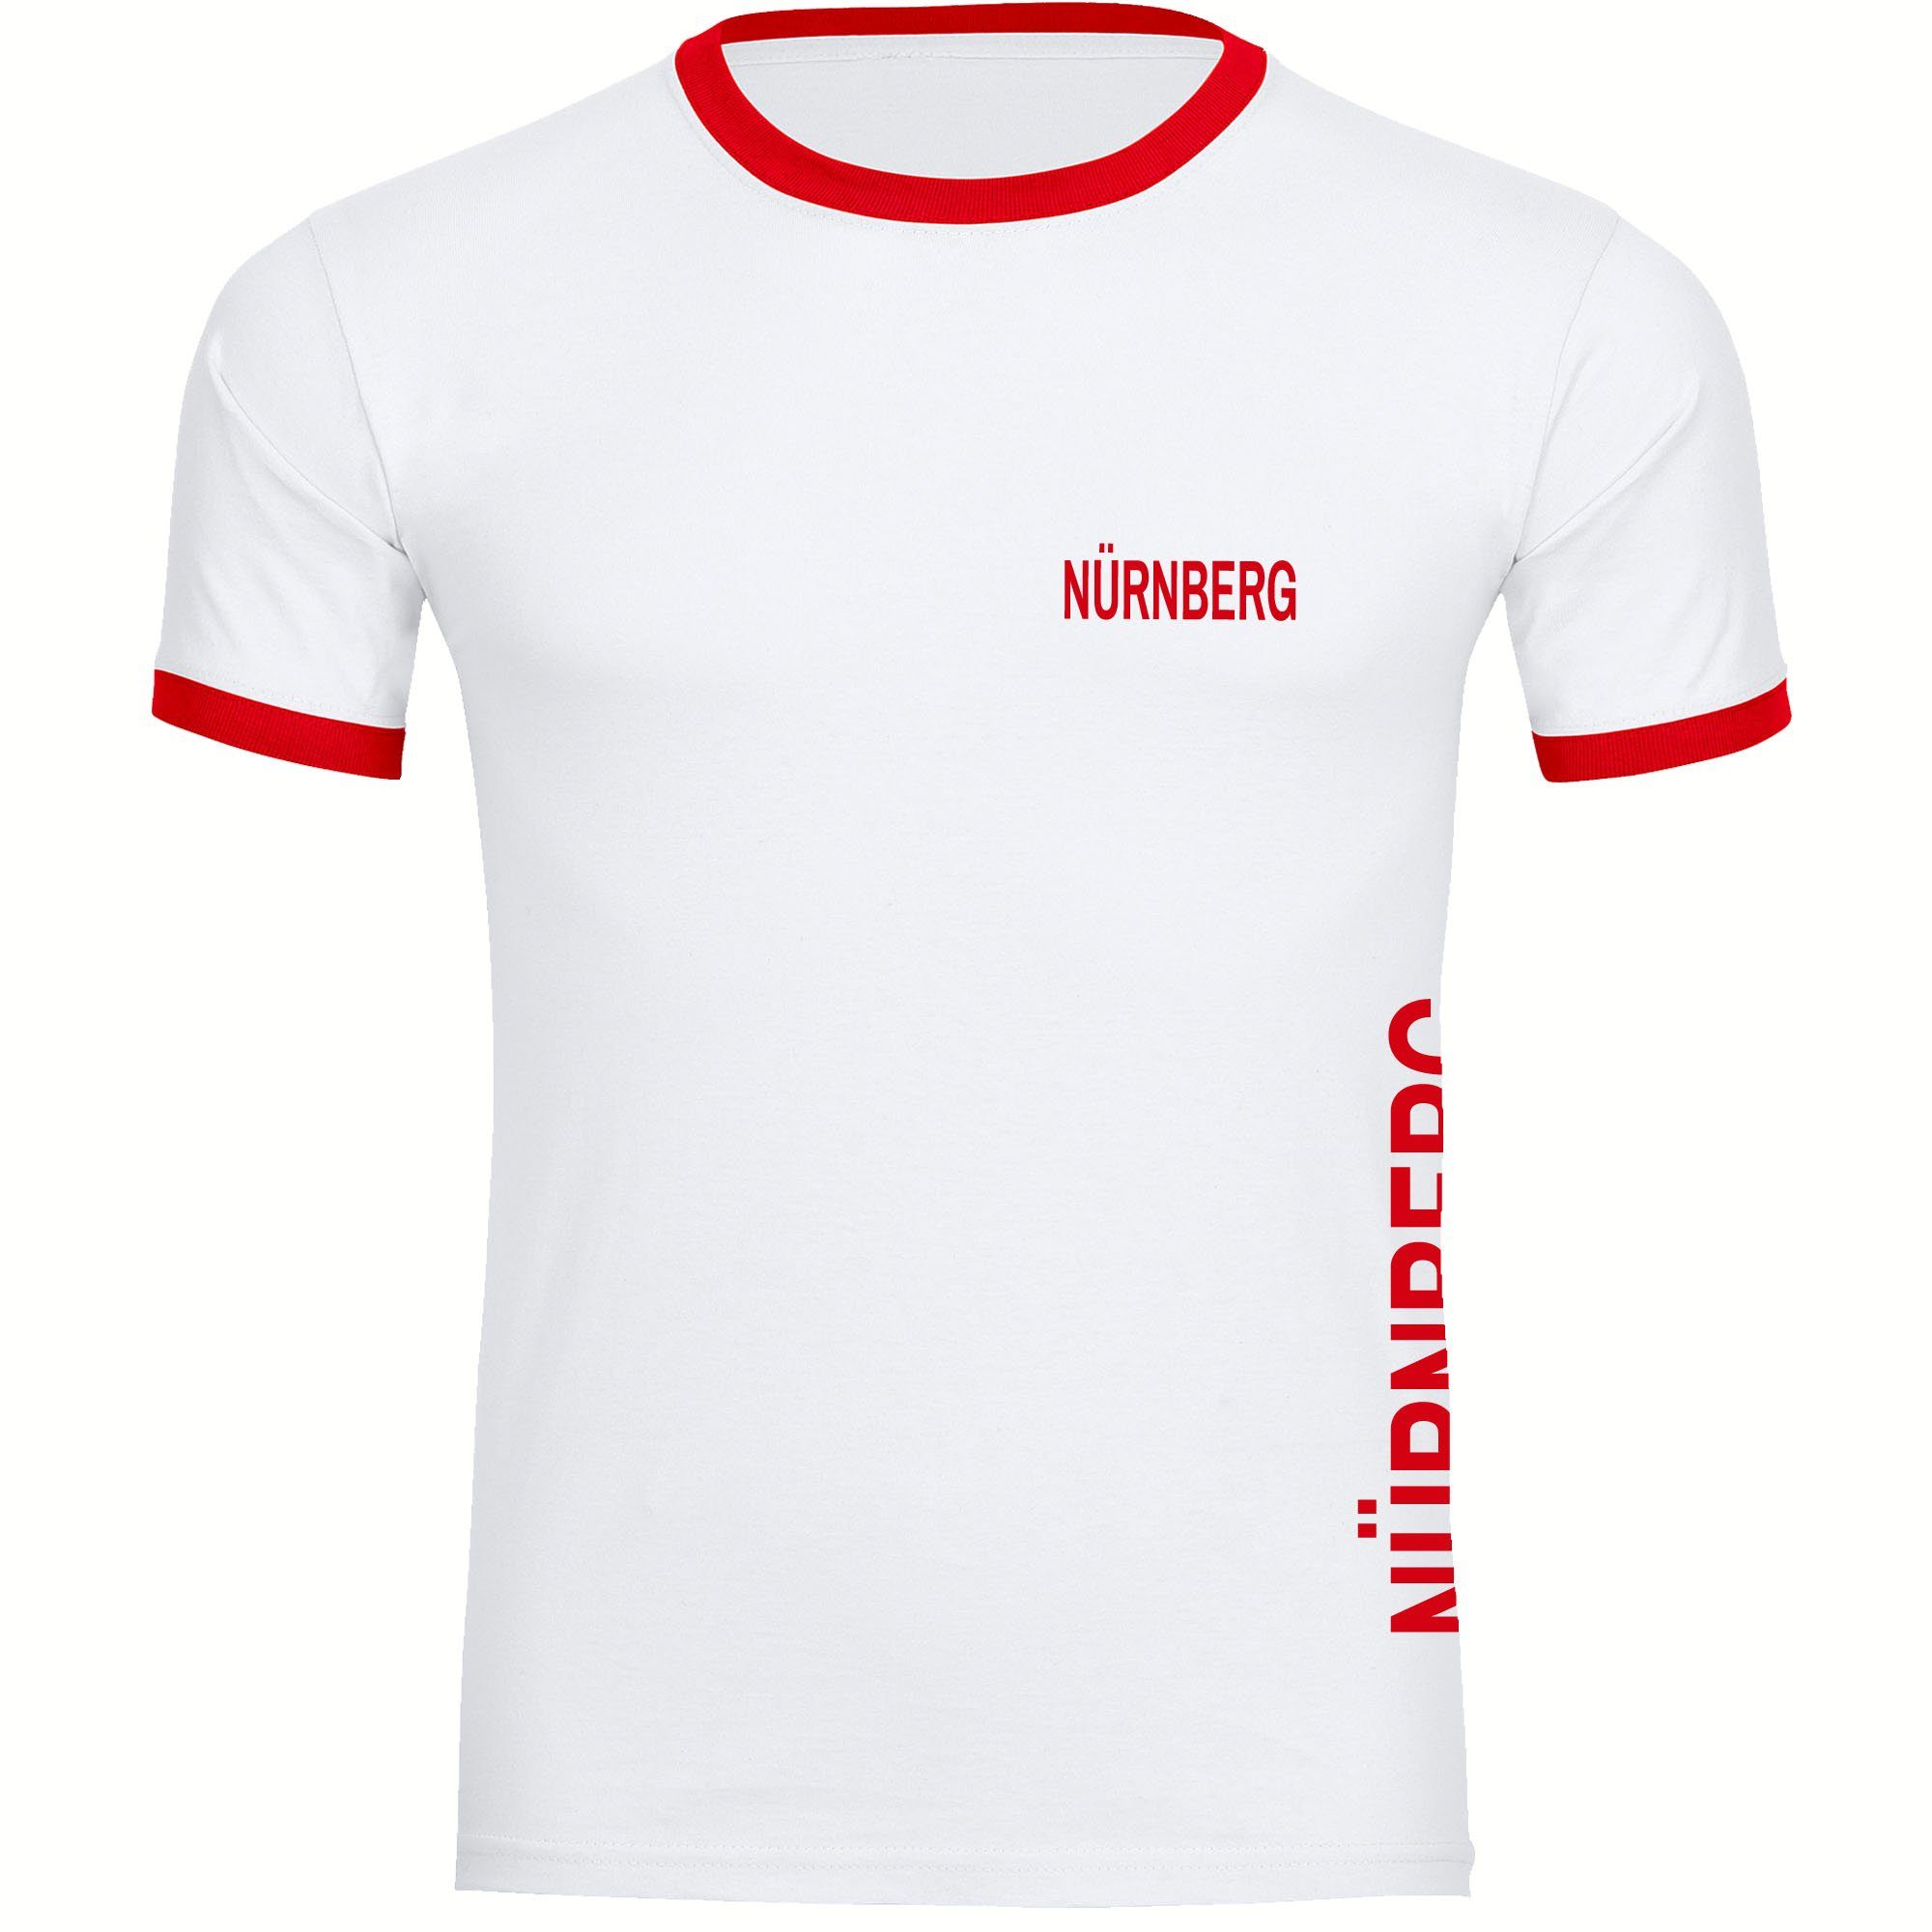 multifanshop T-Shirt Kontrast Nürnberg - Brust & Seite - Männer